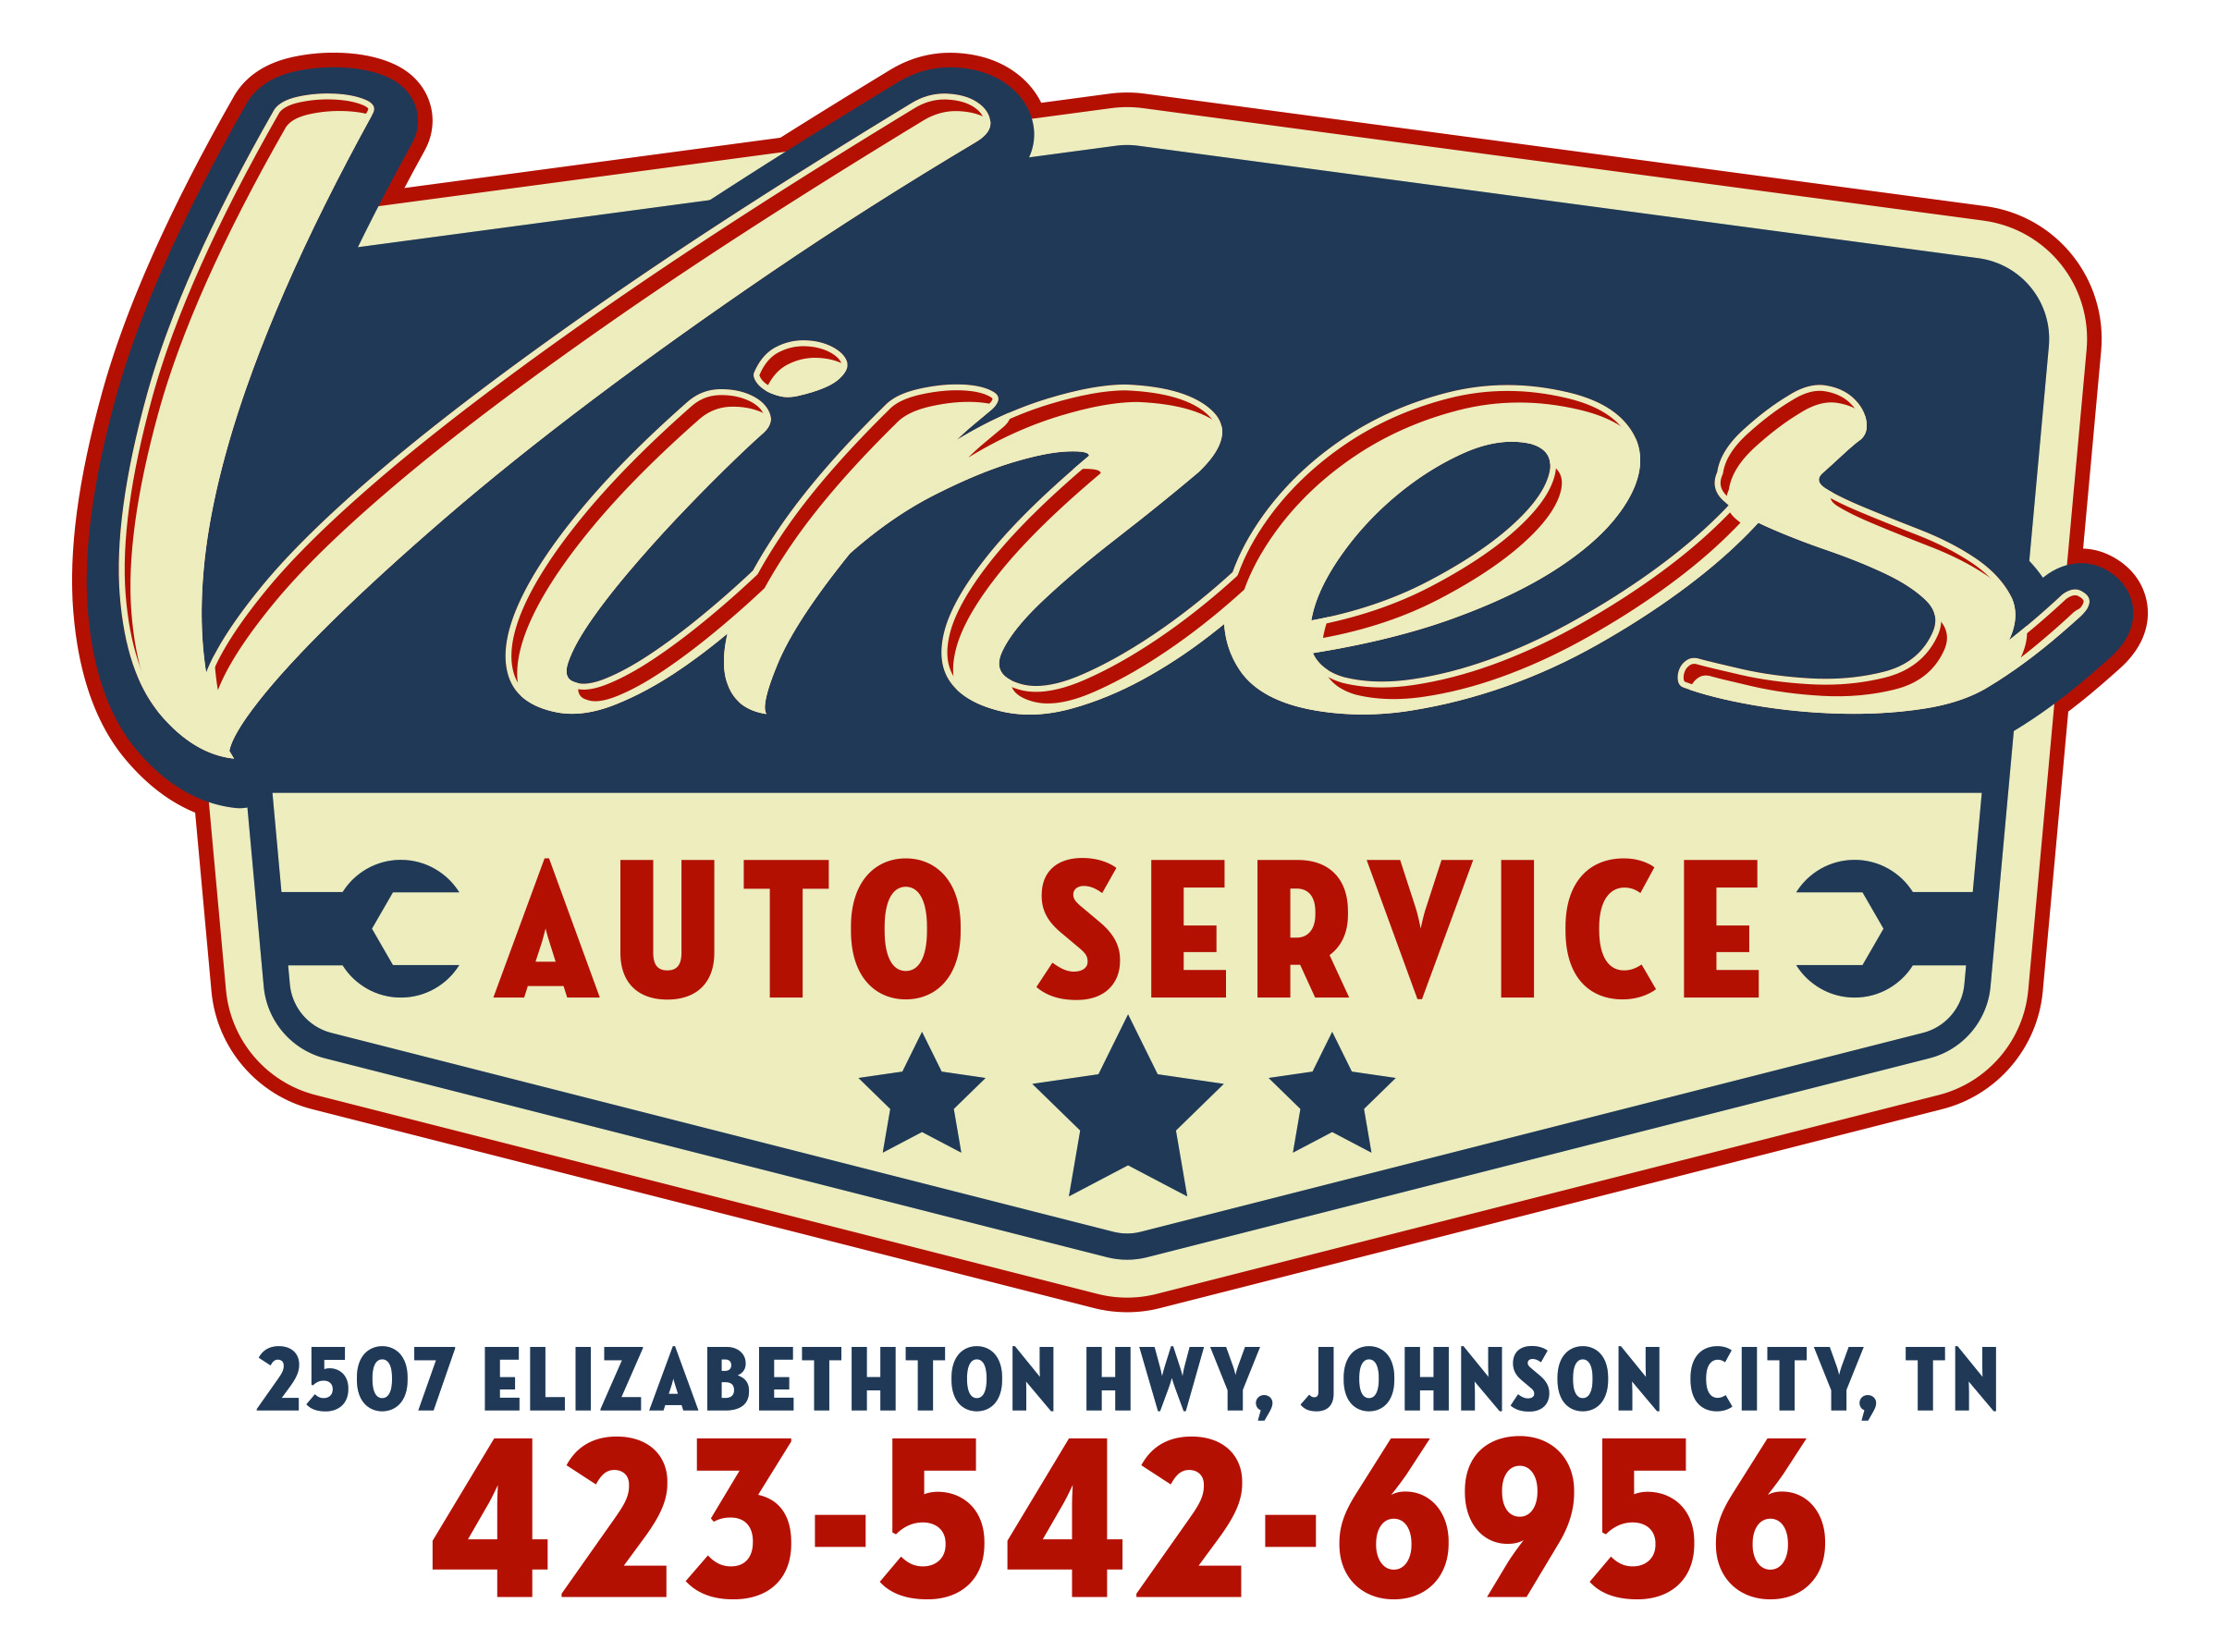 Vines Auto Service